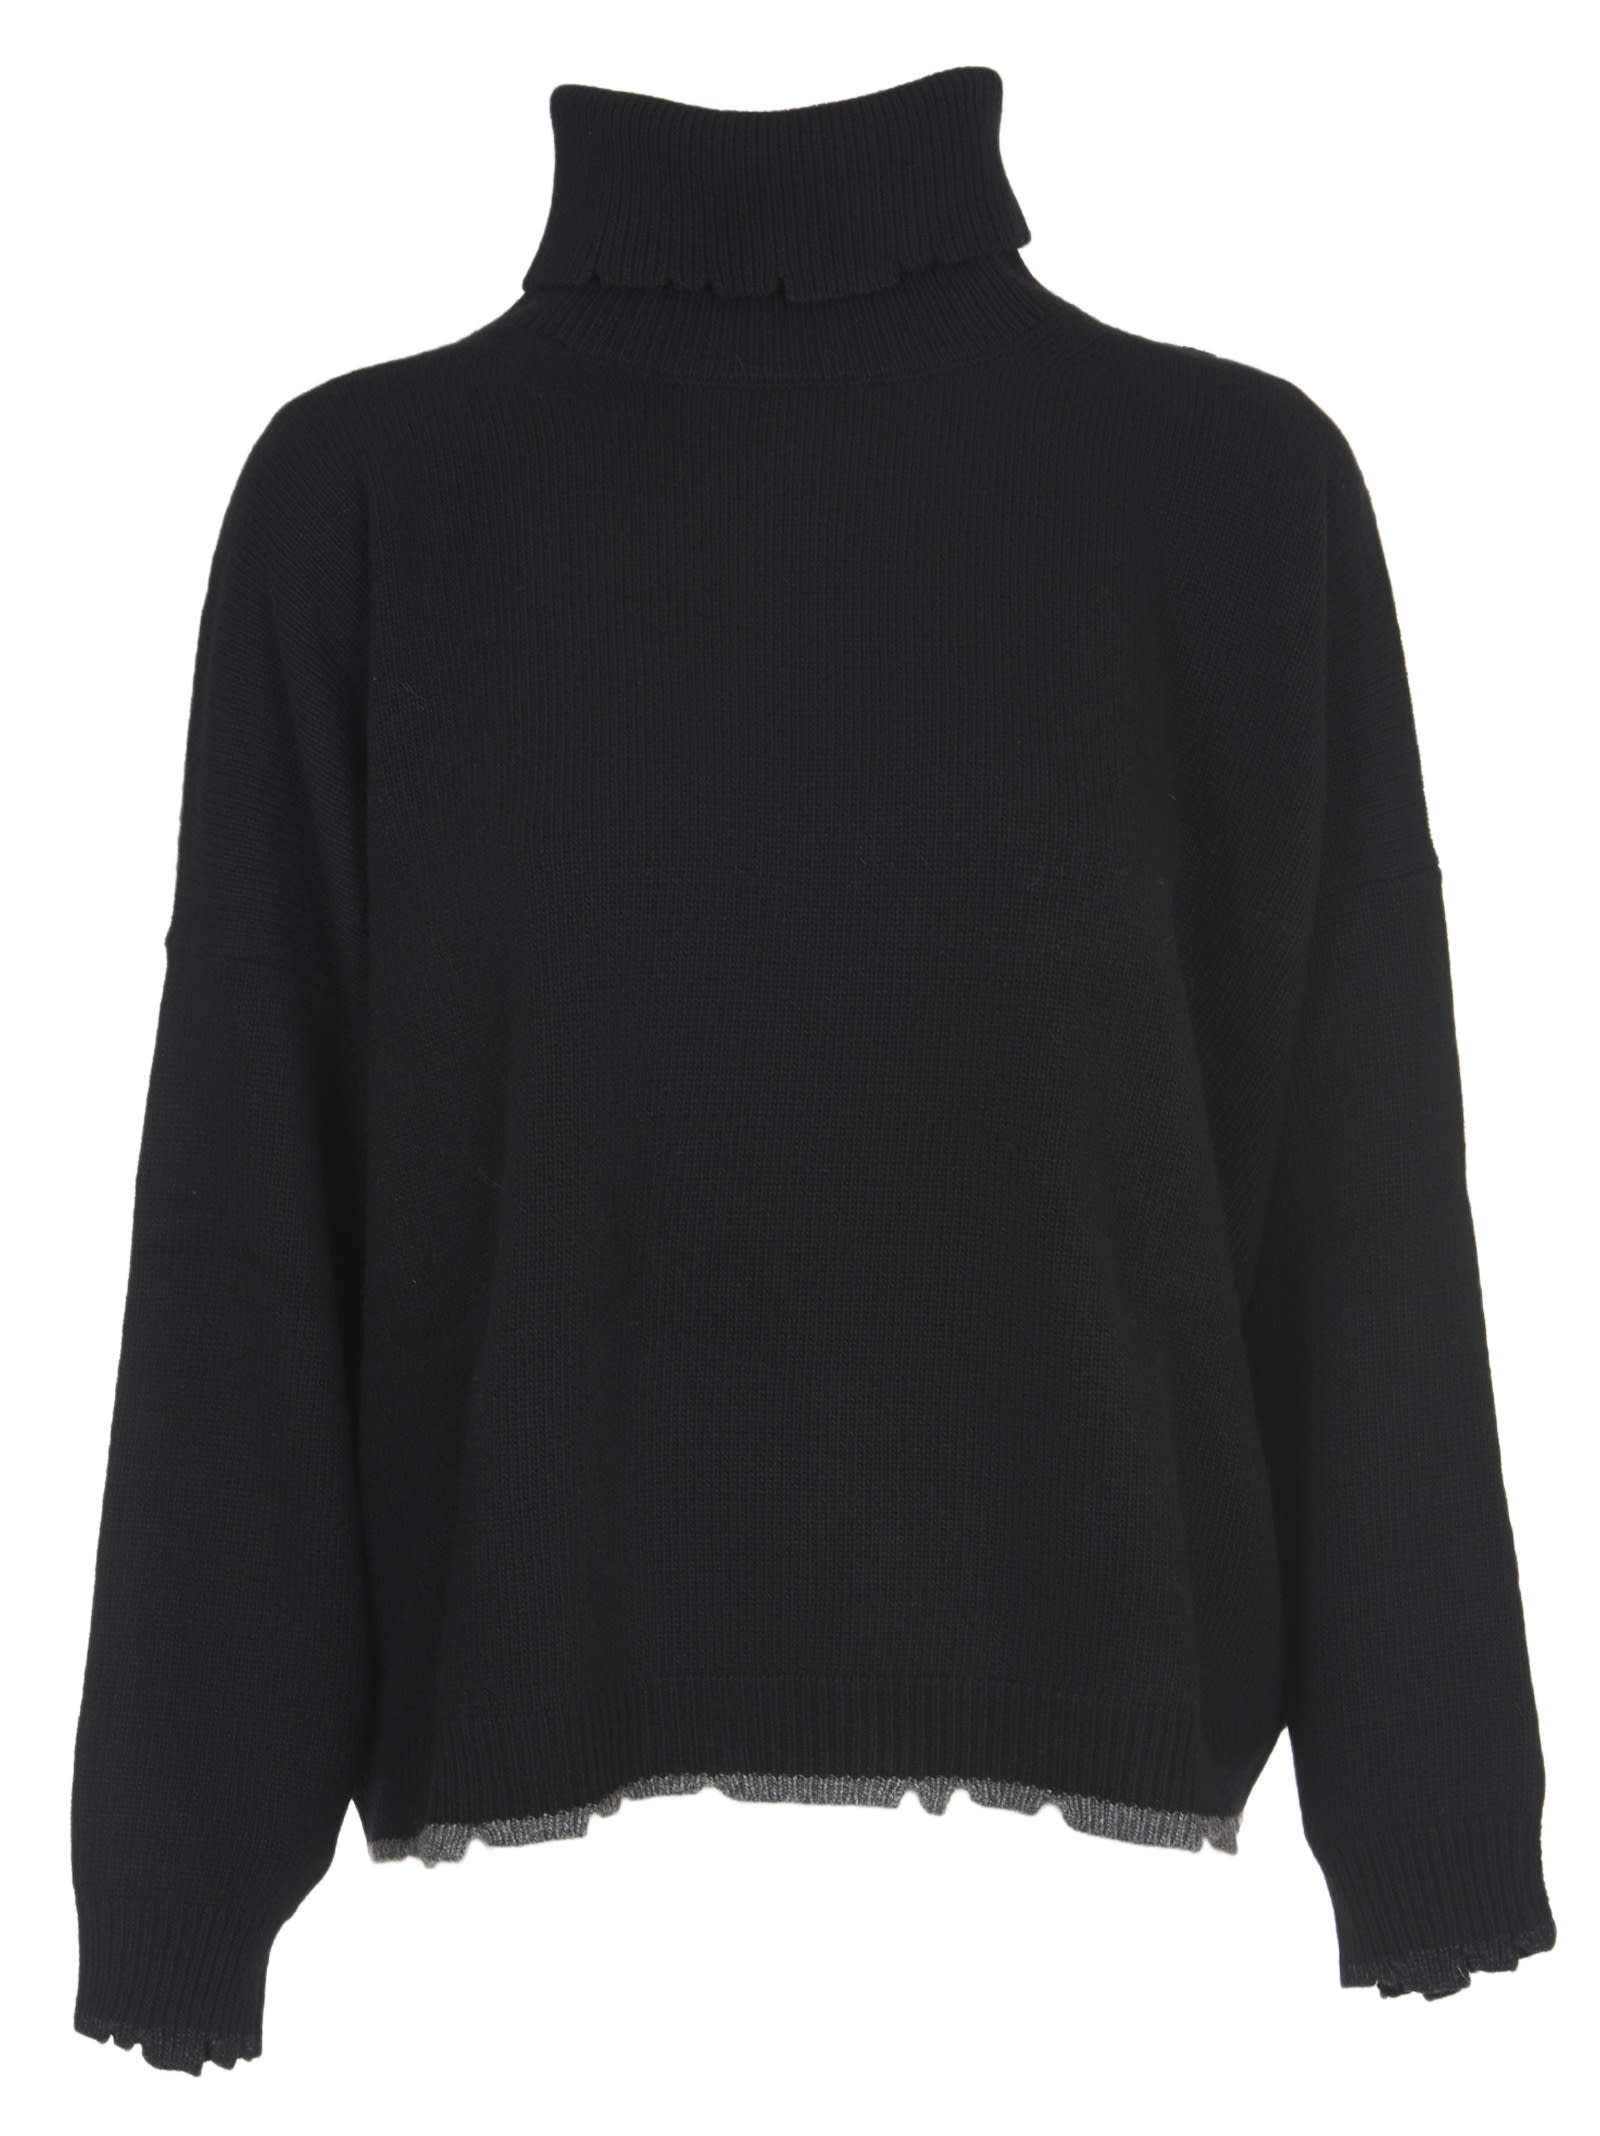 SEMICOUTURE Black Turtleneck Sweater